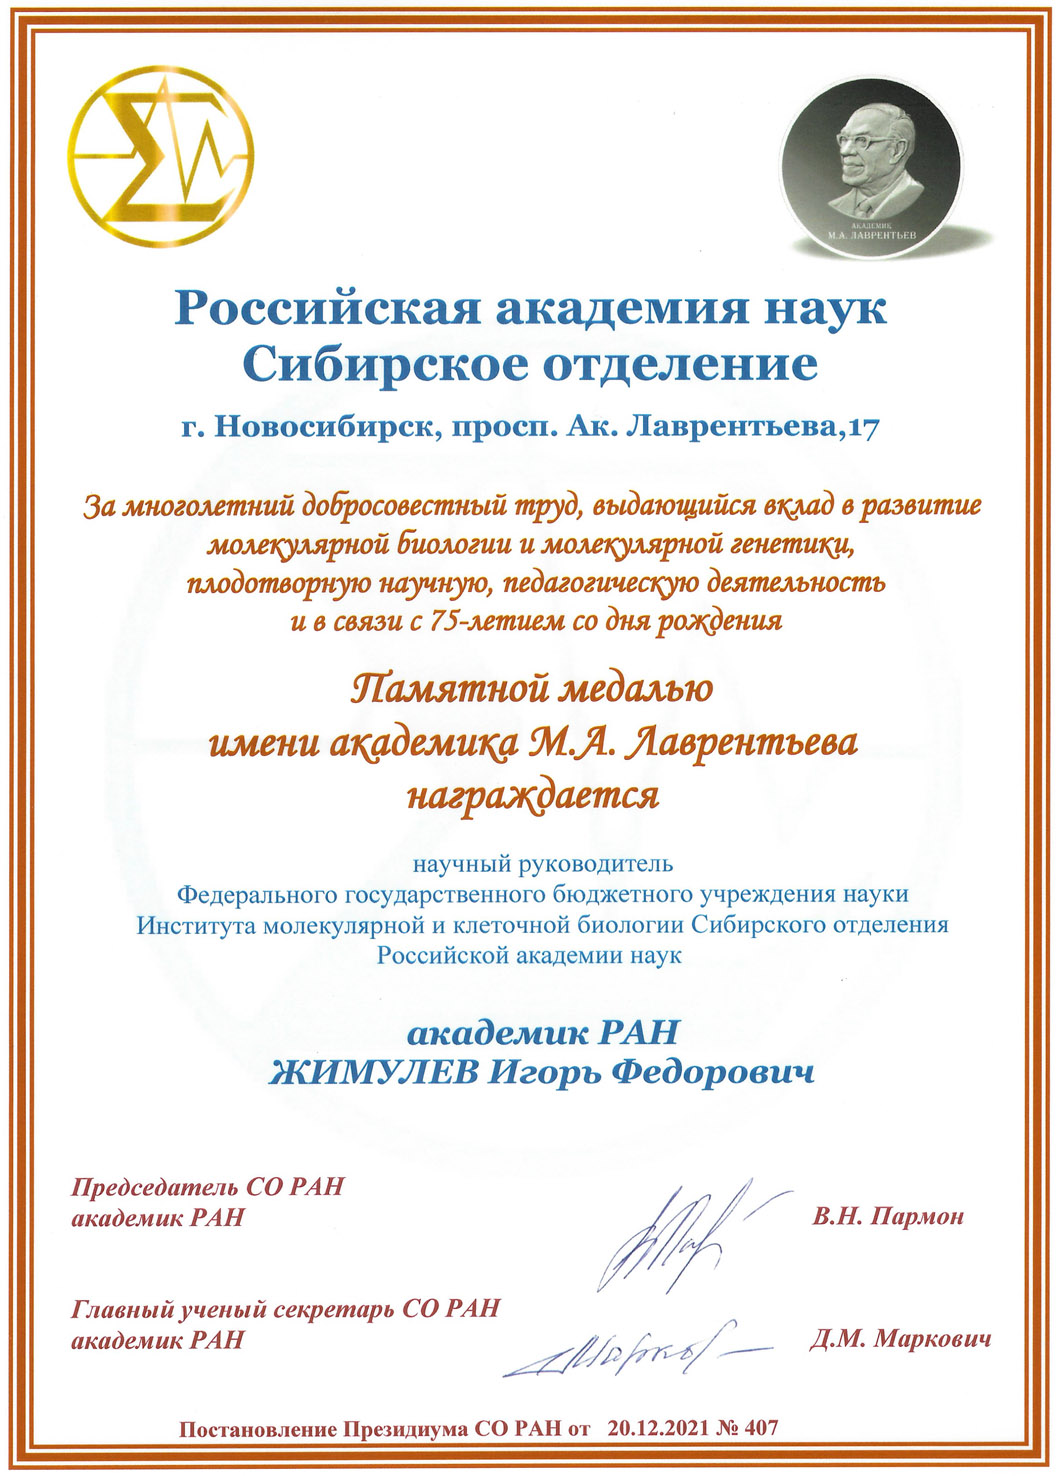 Lavrentiev_medal_text.jpg